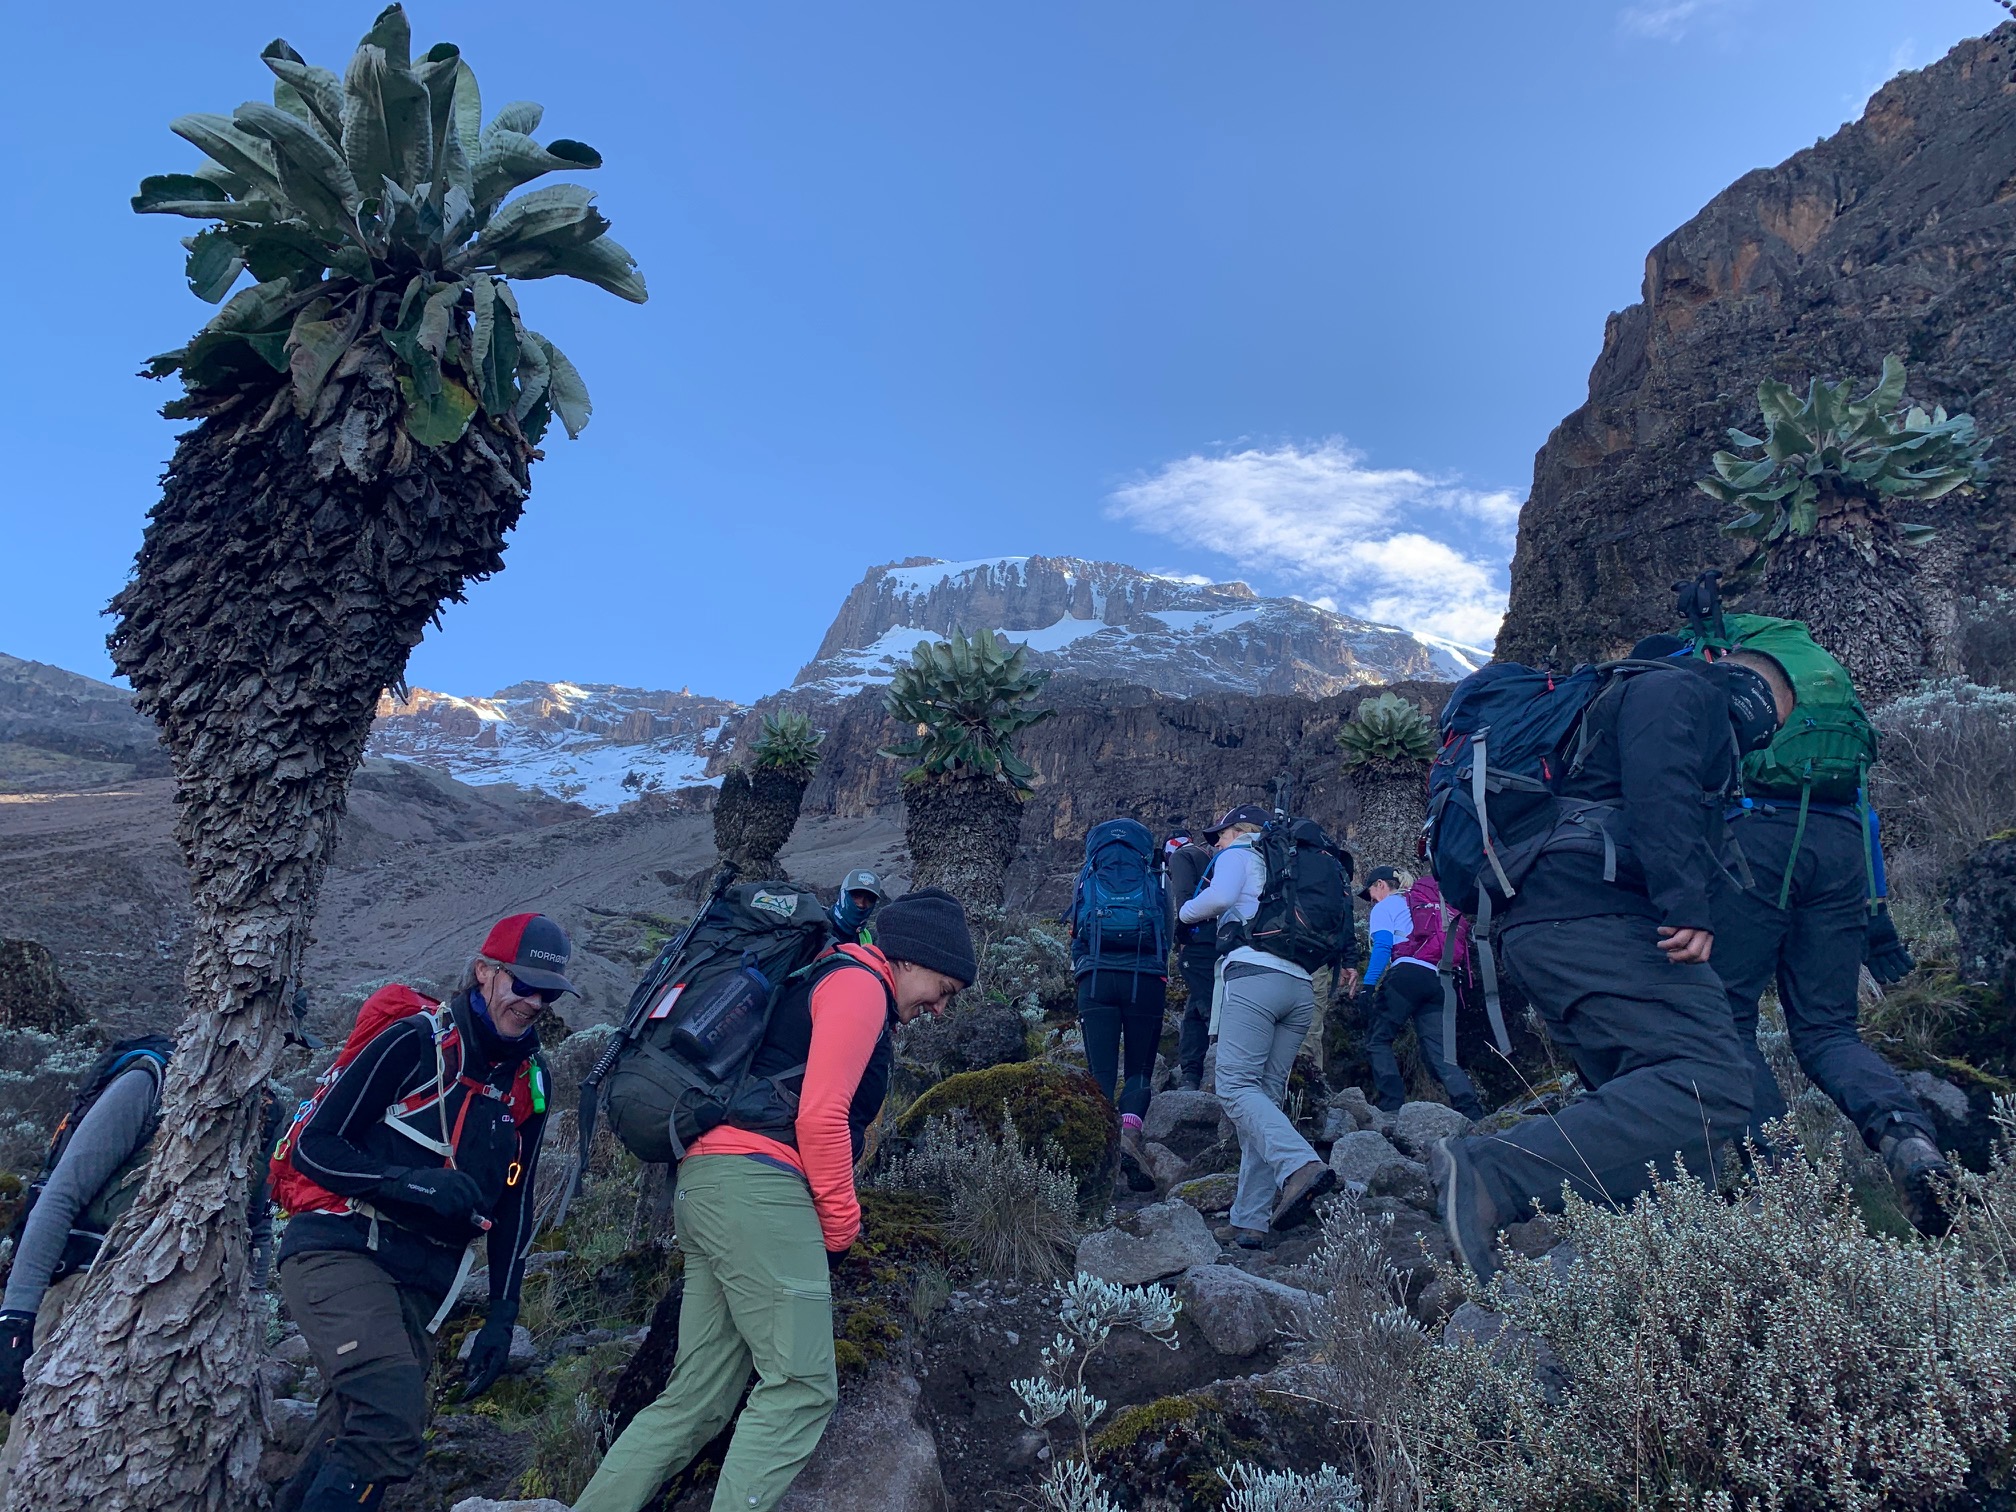 Heading up the Barranco Wall on Kilimanjaro